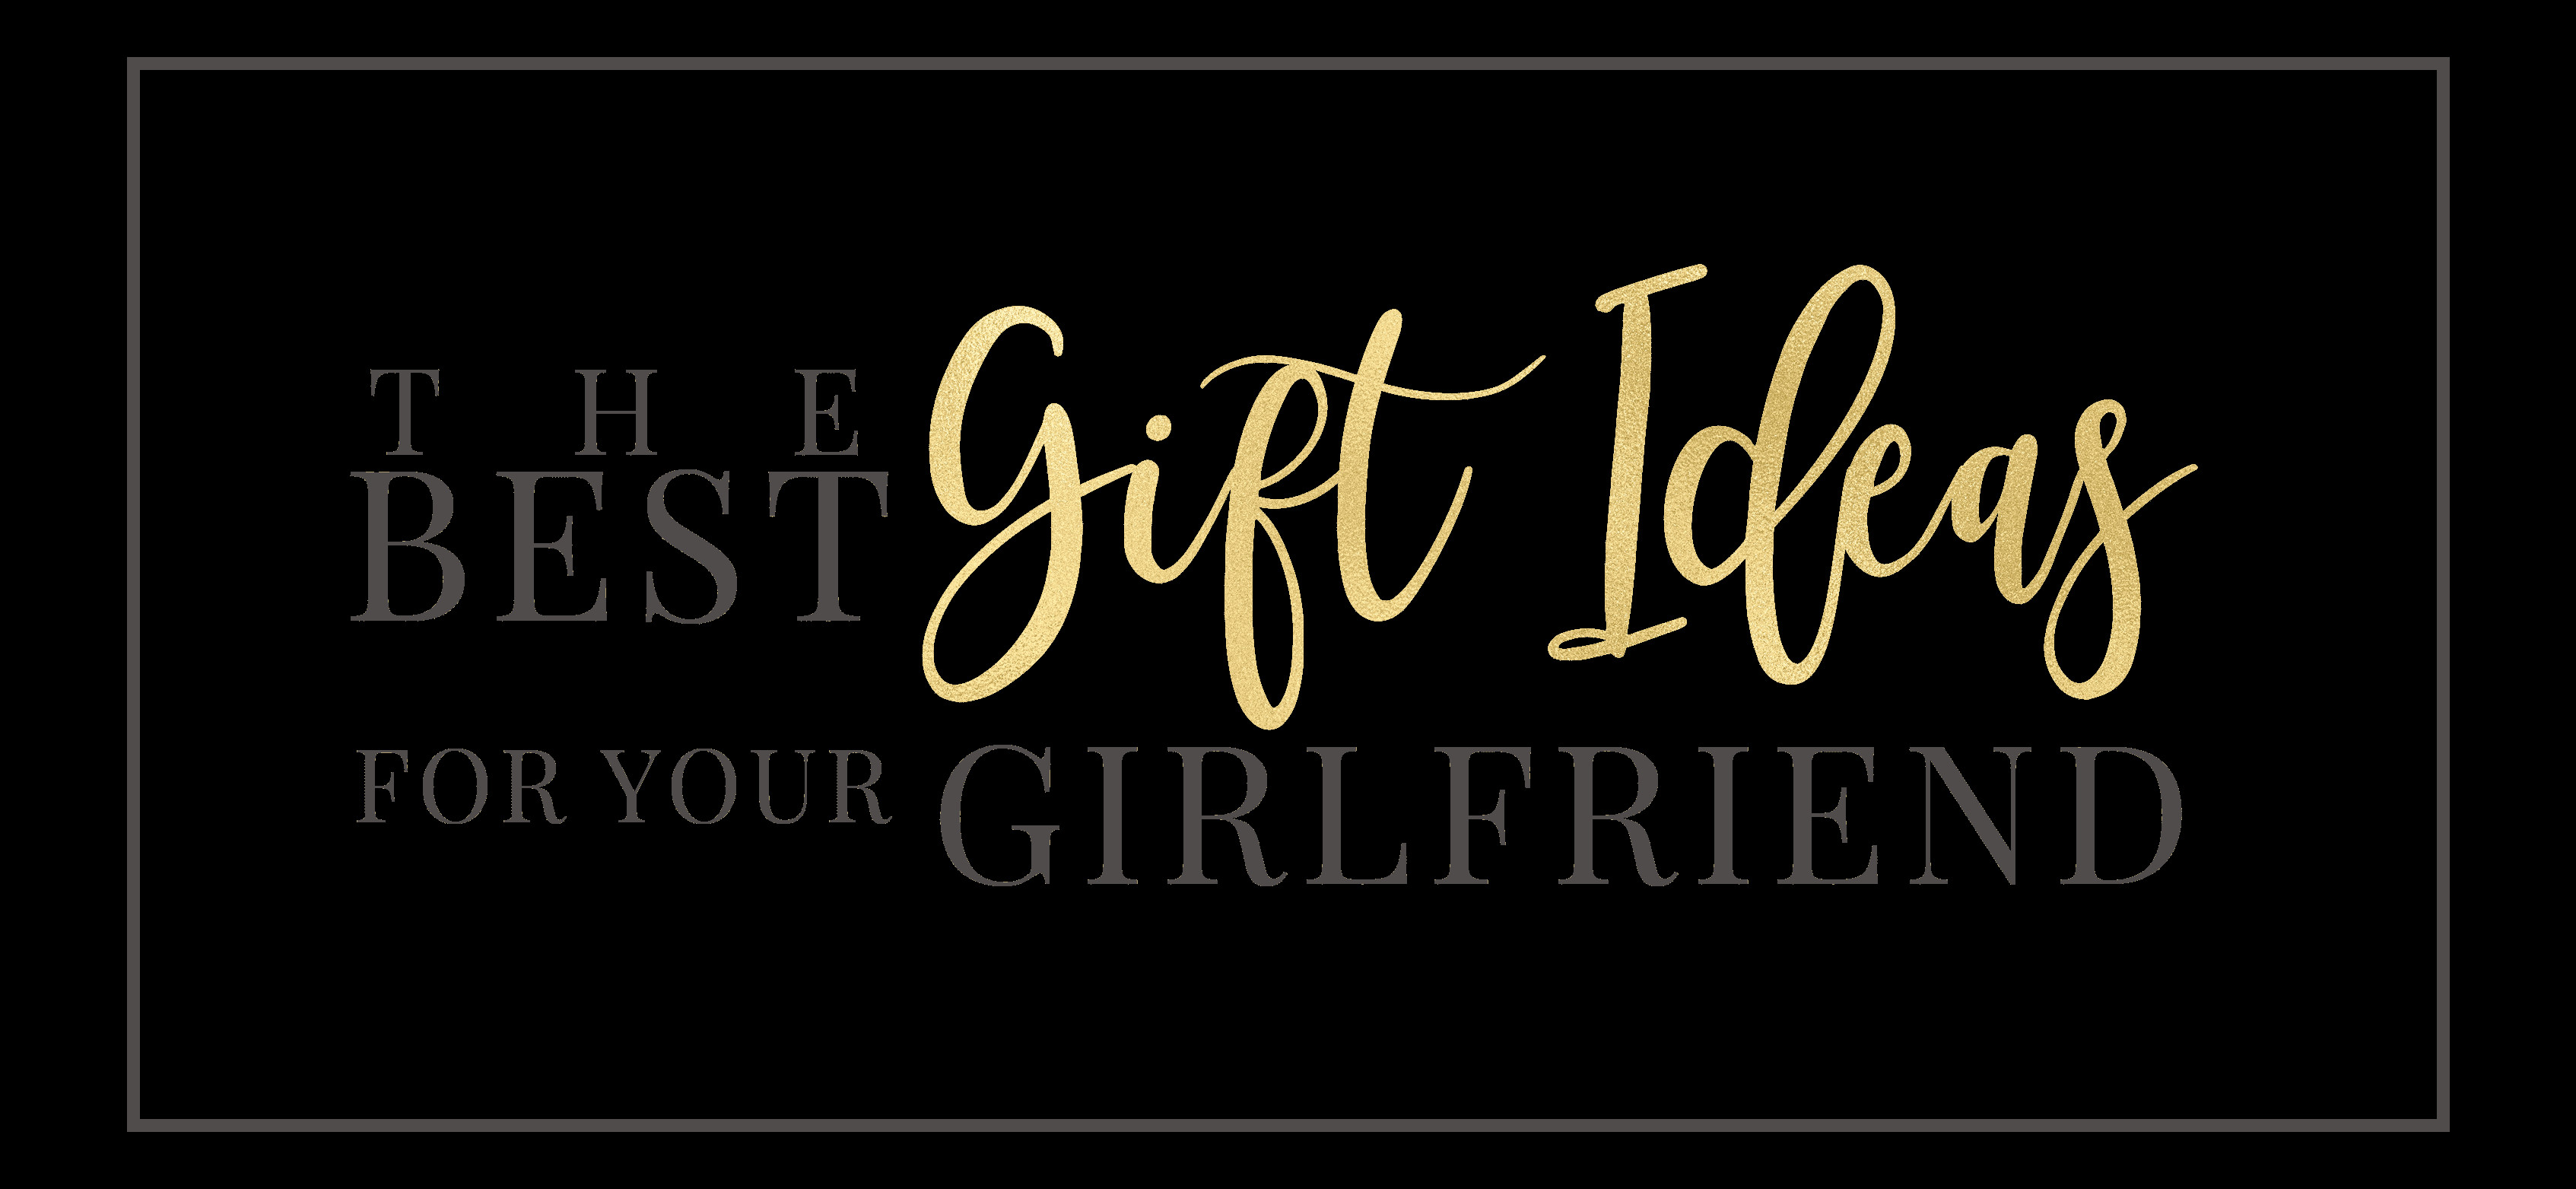 Great Gift Ideas For Girlfriend
 TheBestGiftIdeasForYourGirlfriendlogo1 The Best Gift